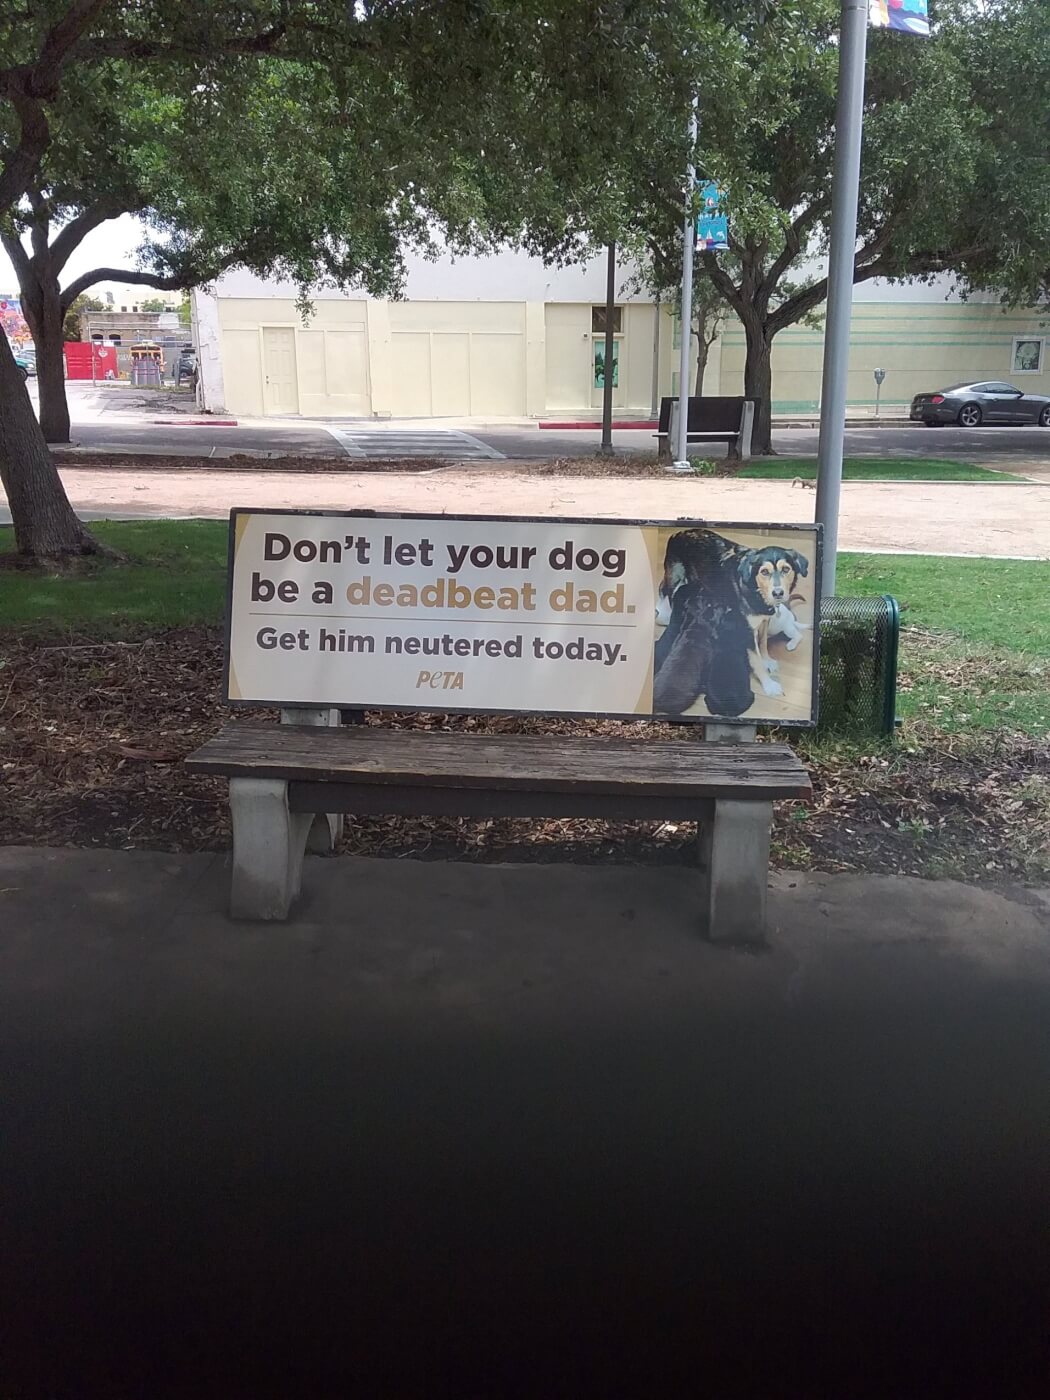 PETA's deadbeat dad dog ad hits Corpus Christi